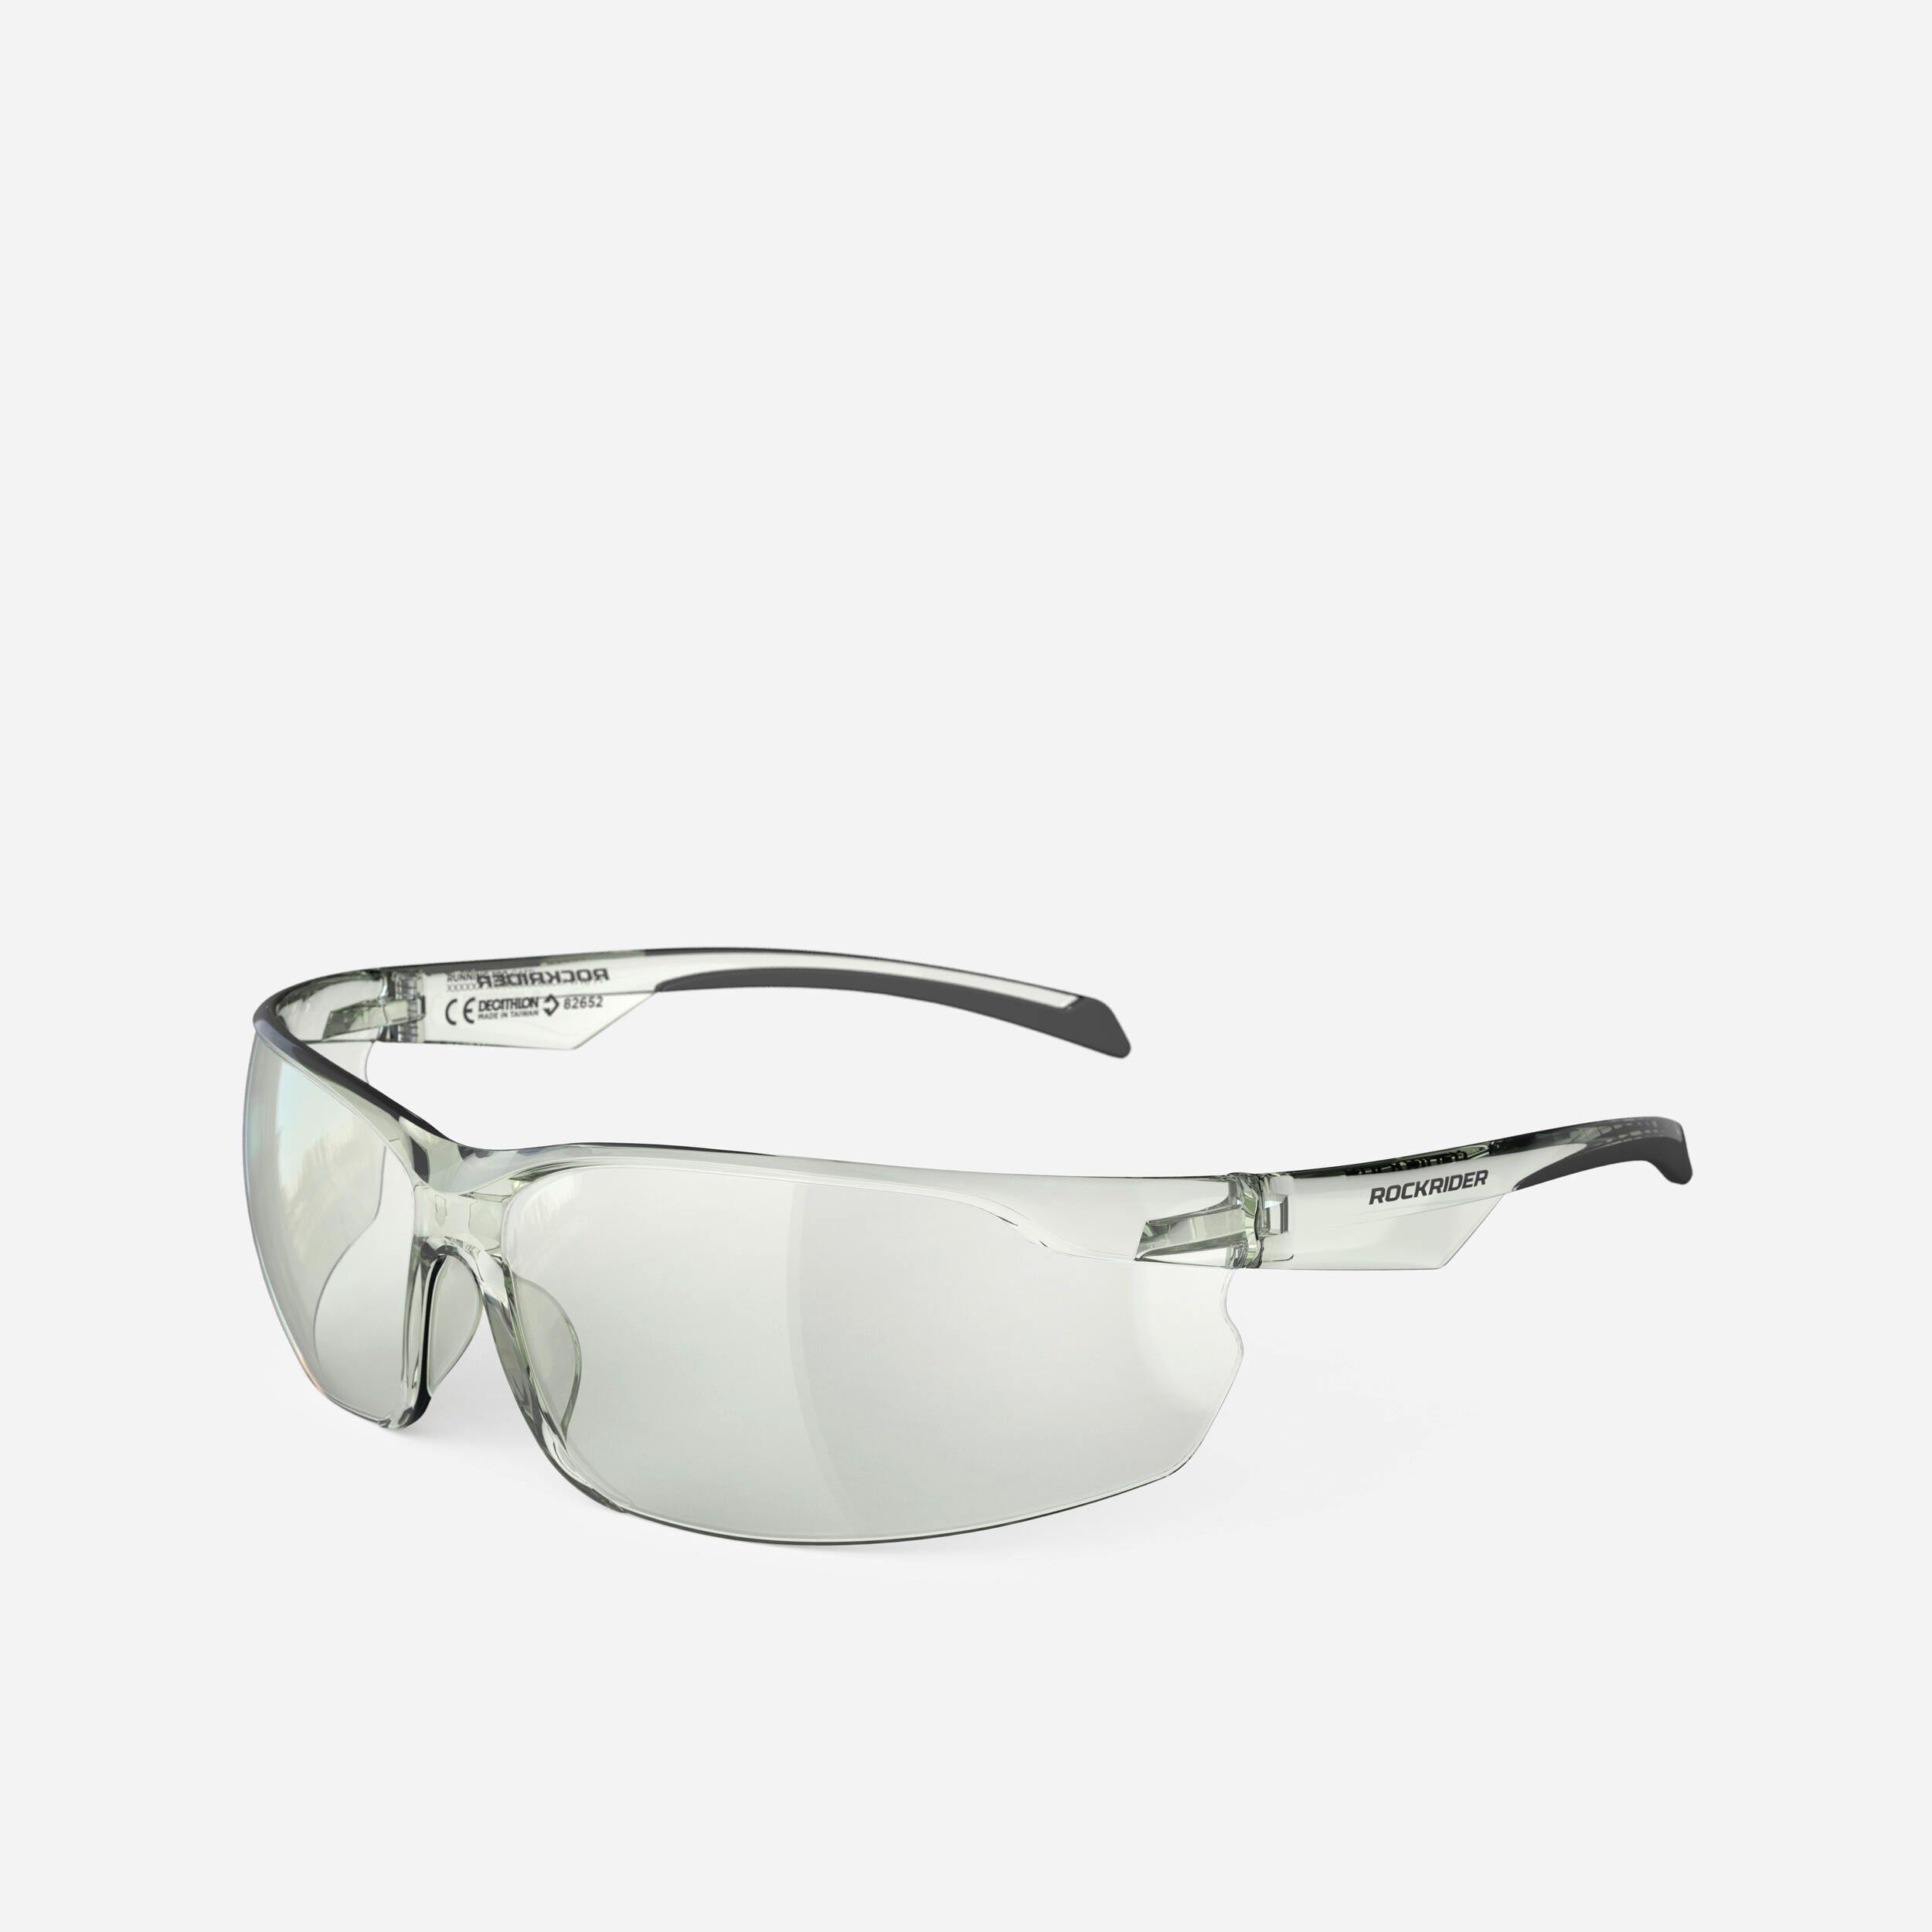 ROCKRIDER ST 100 MTB Sunglasses Category 0 - Transparent